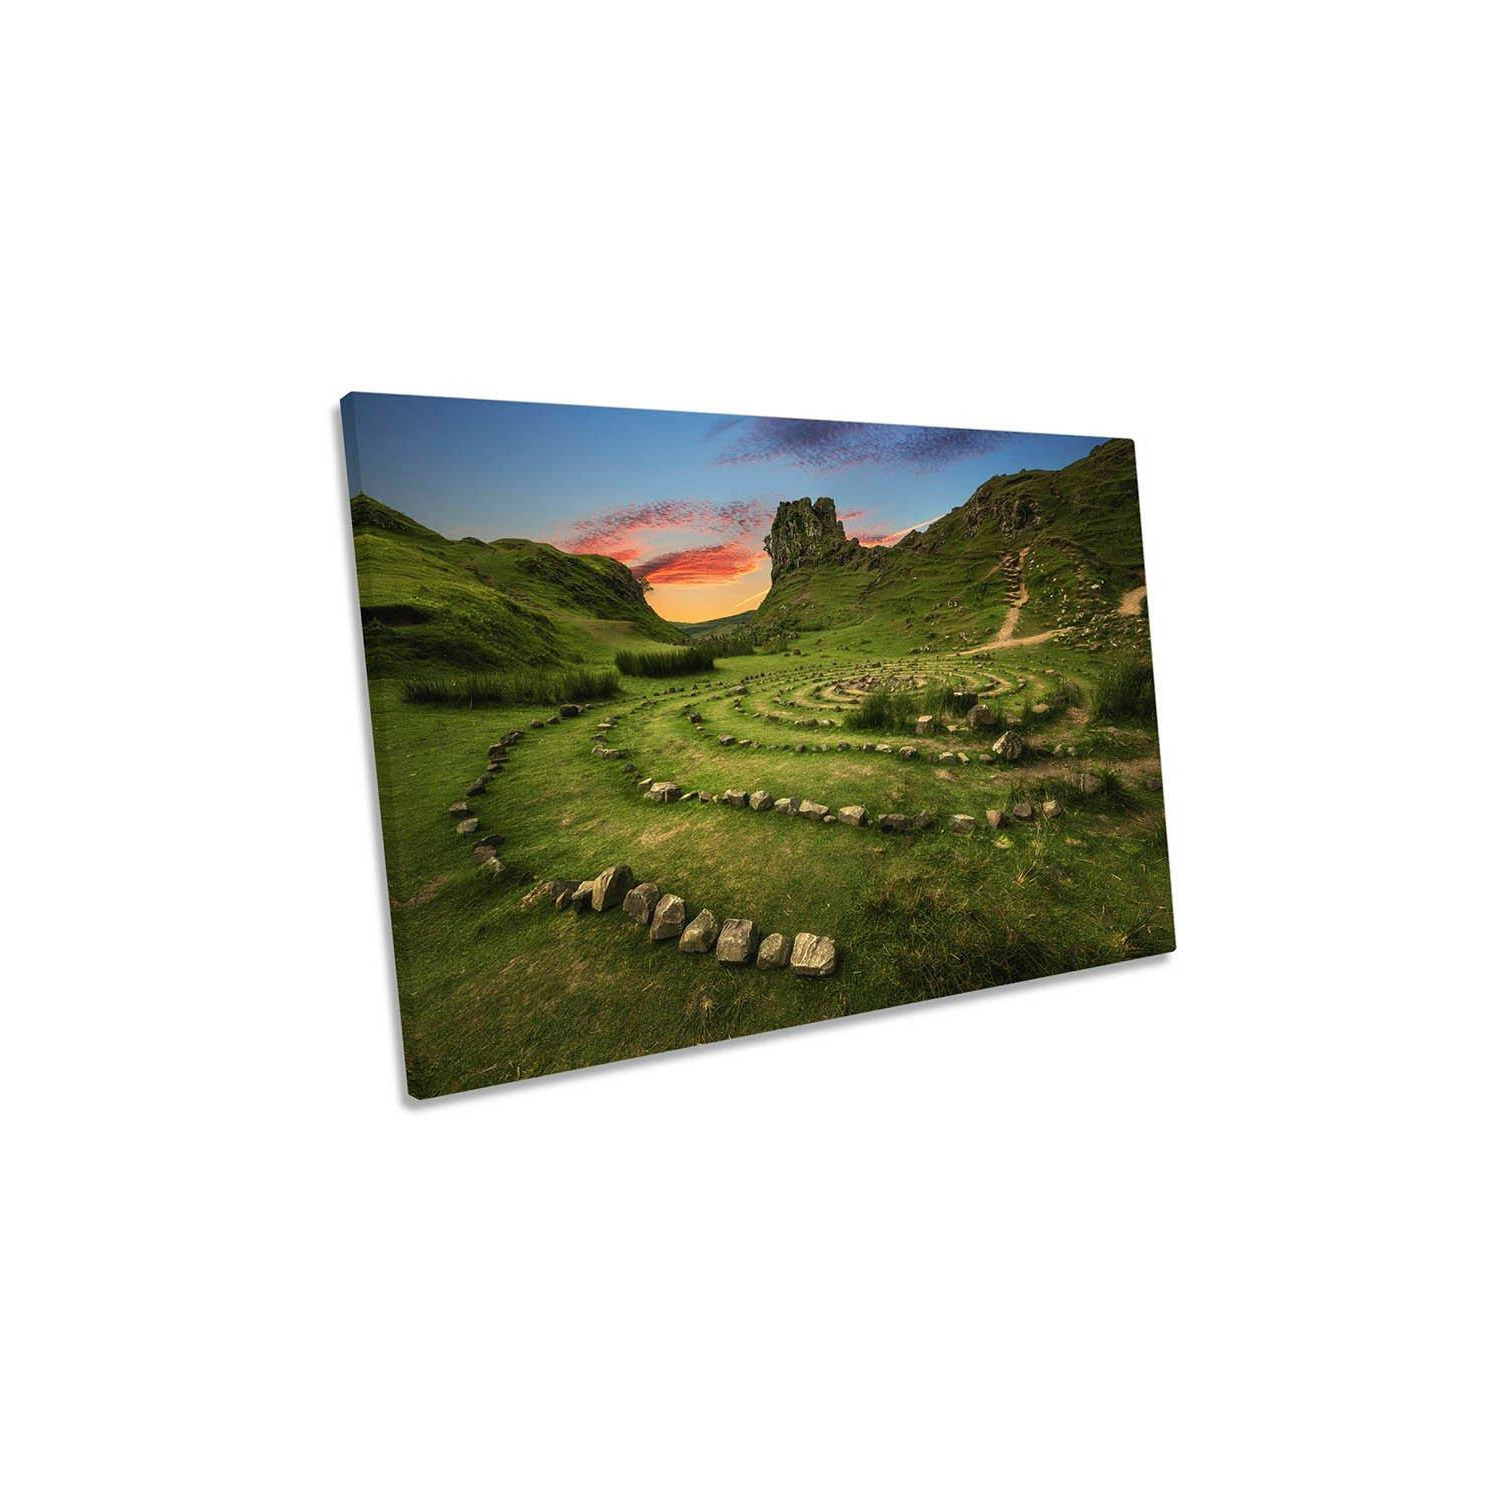 Fairy Glen Isle of Skye Scotland Canvas Wall Art Picture Print - image 1